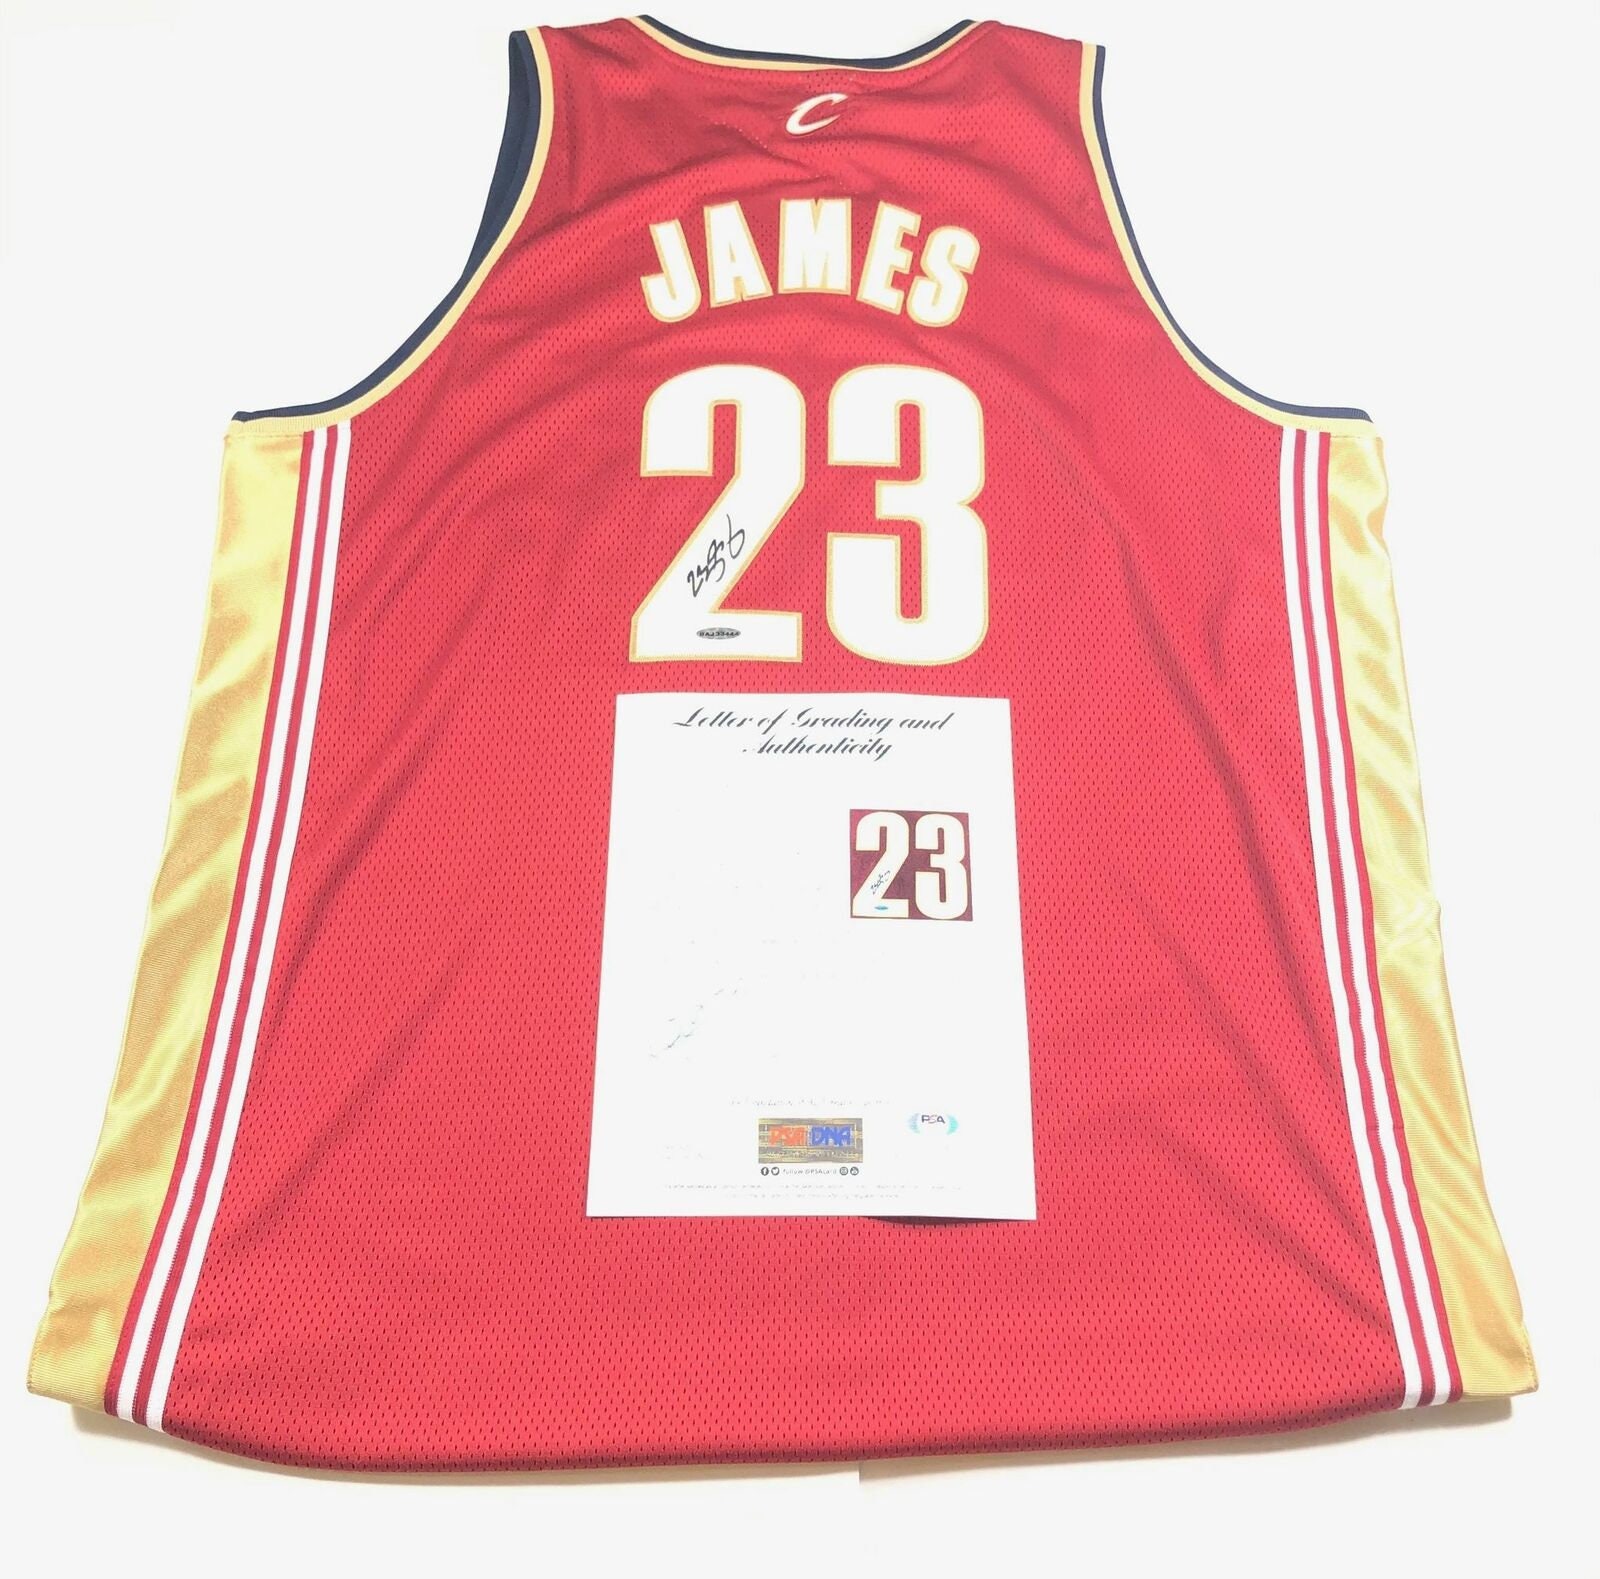 LeBron James NBA Original Autographed Jerseys for sale